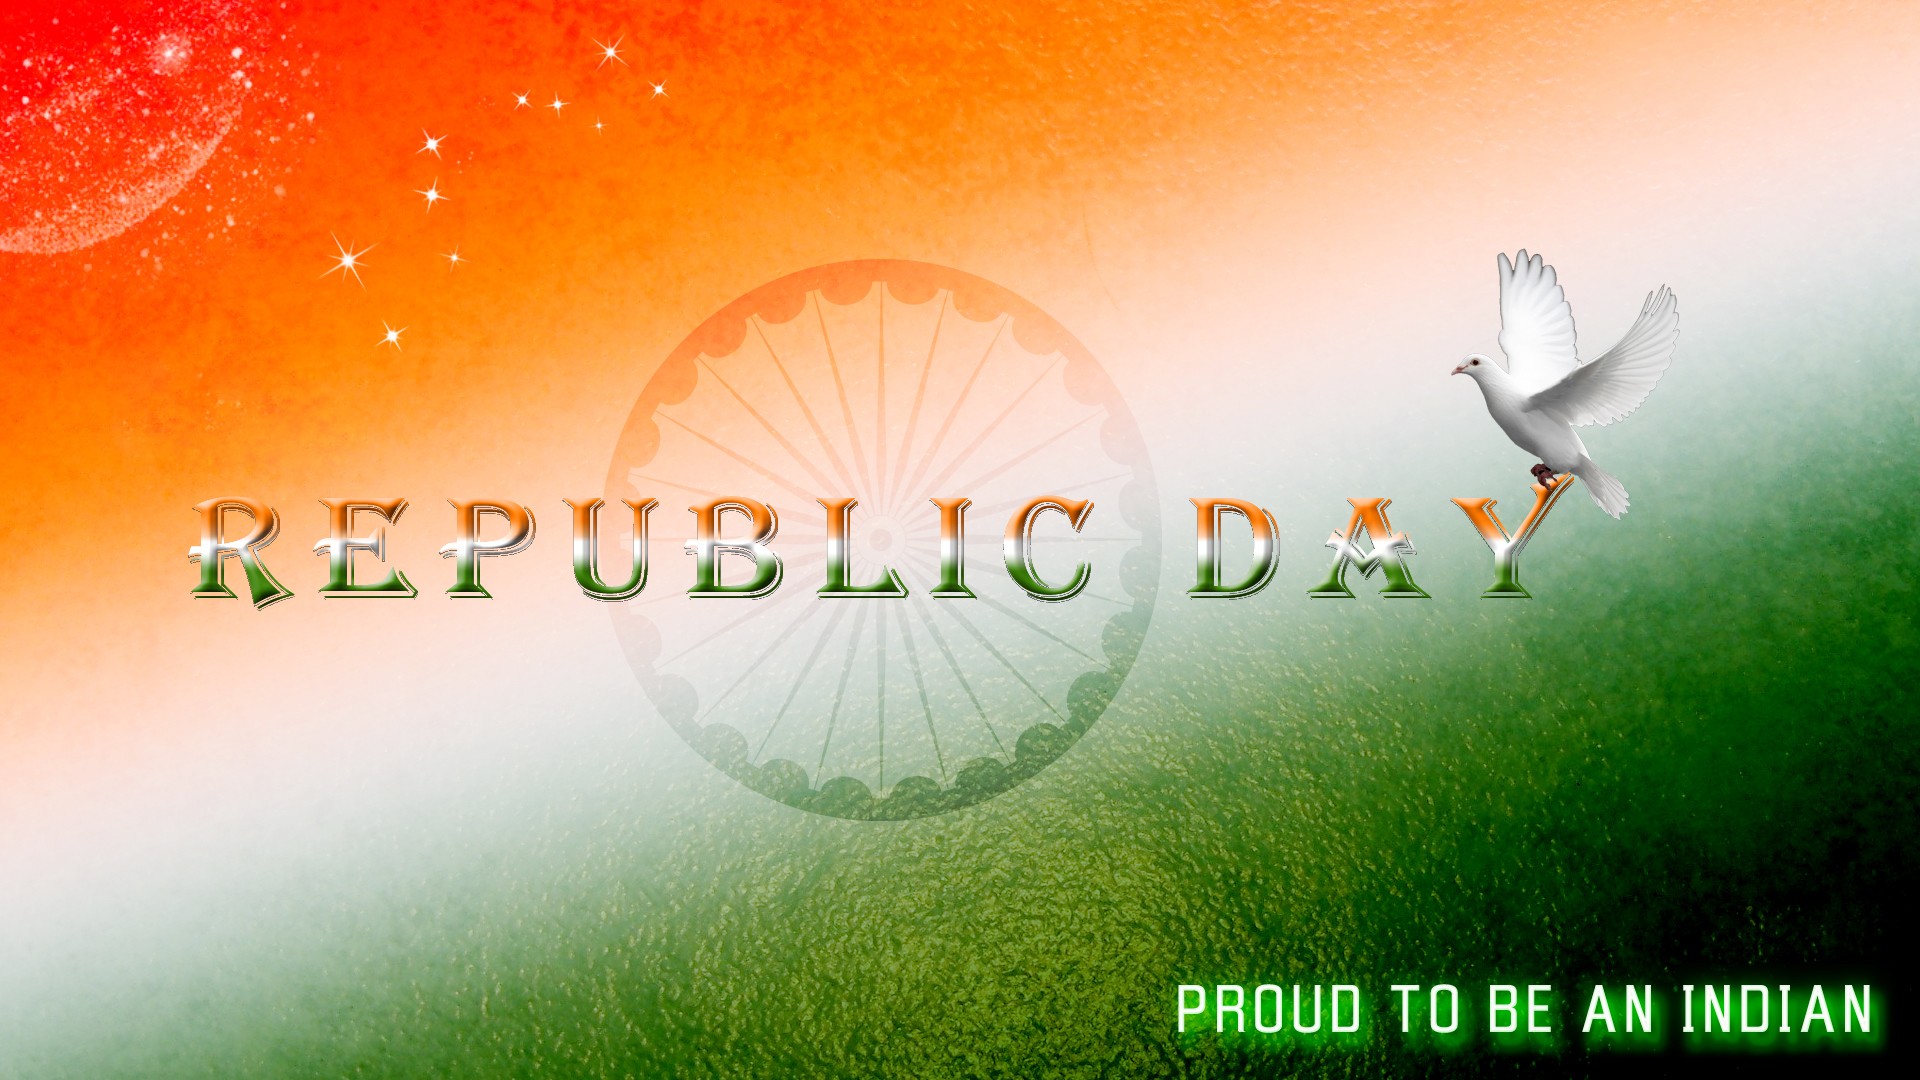 HD wallpaper: 26 January Indian Republic Day Vecto, Republic Day text,  Festivals / Holidays | Wallpaper Flare